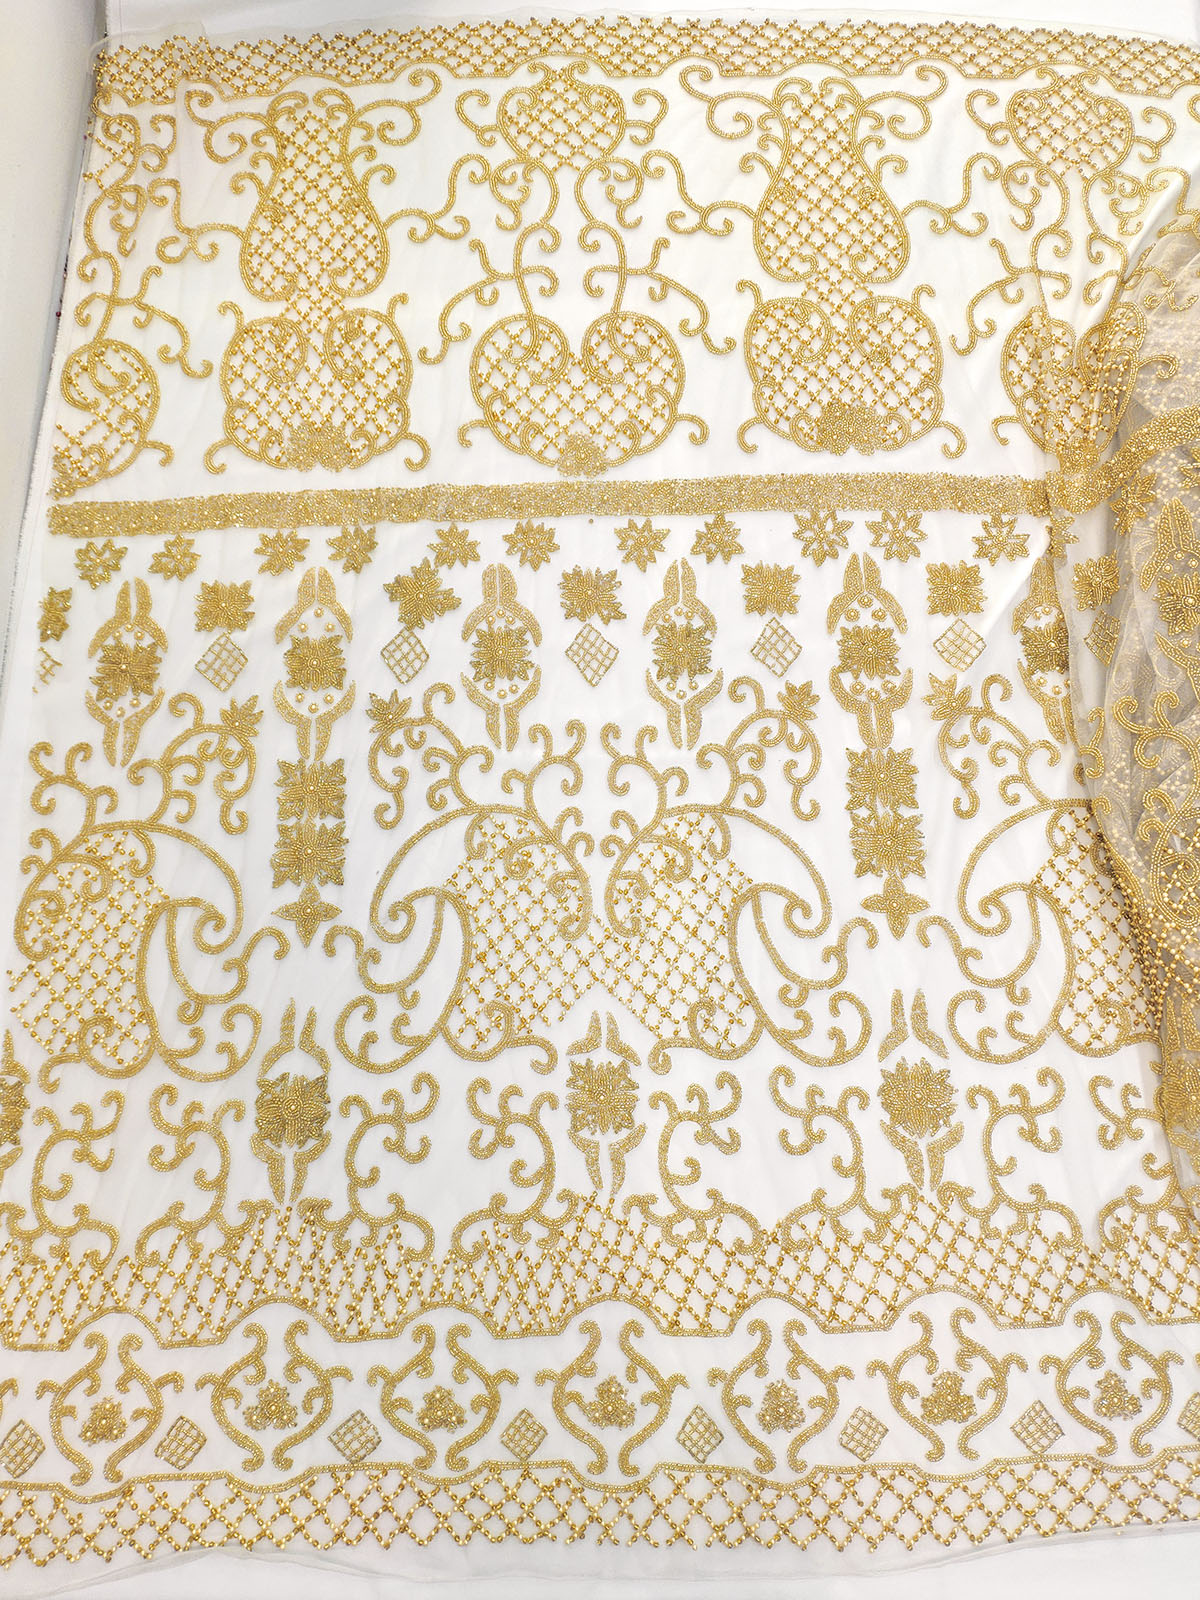 Gold handmade beaded lace fabric